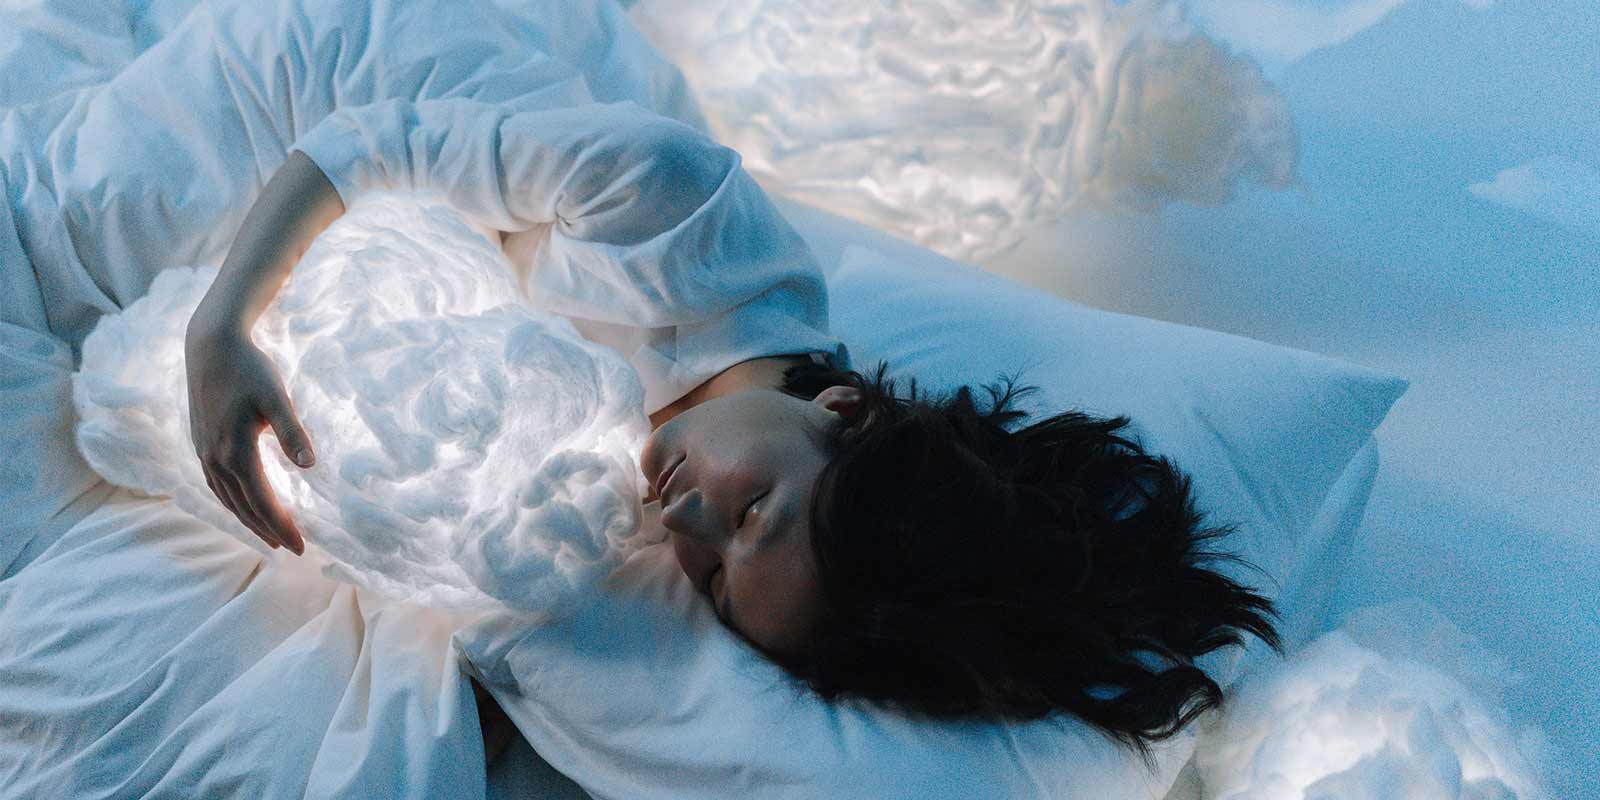 a woman sleeping holding a cloud-like pillow